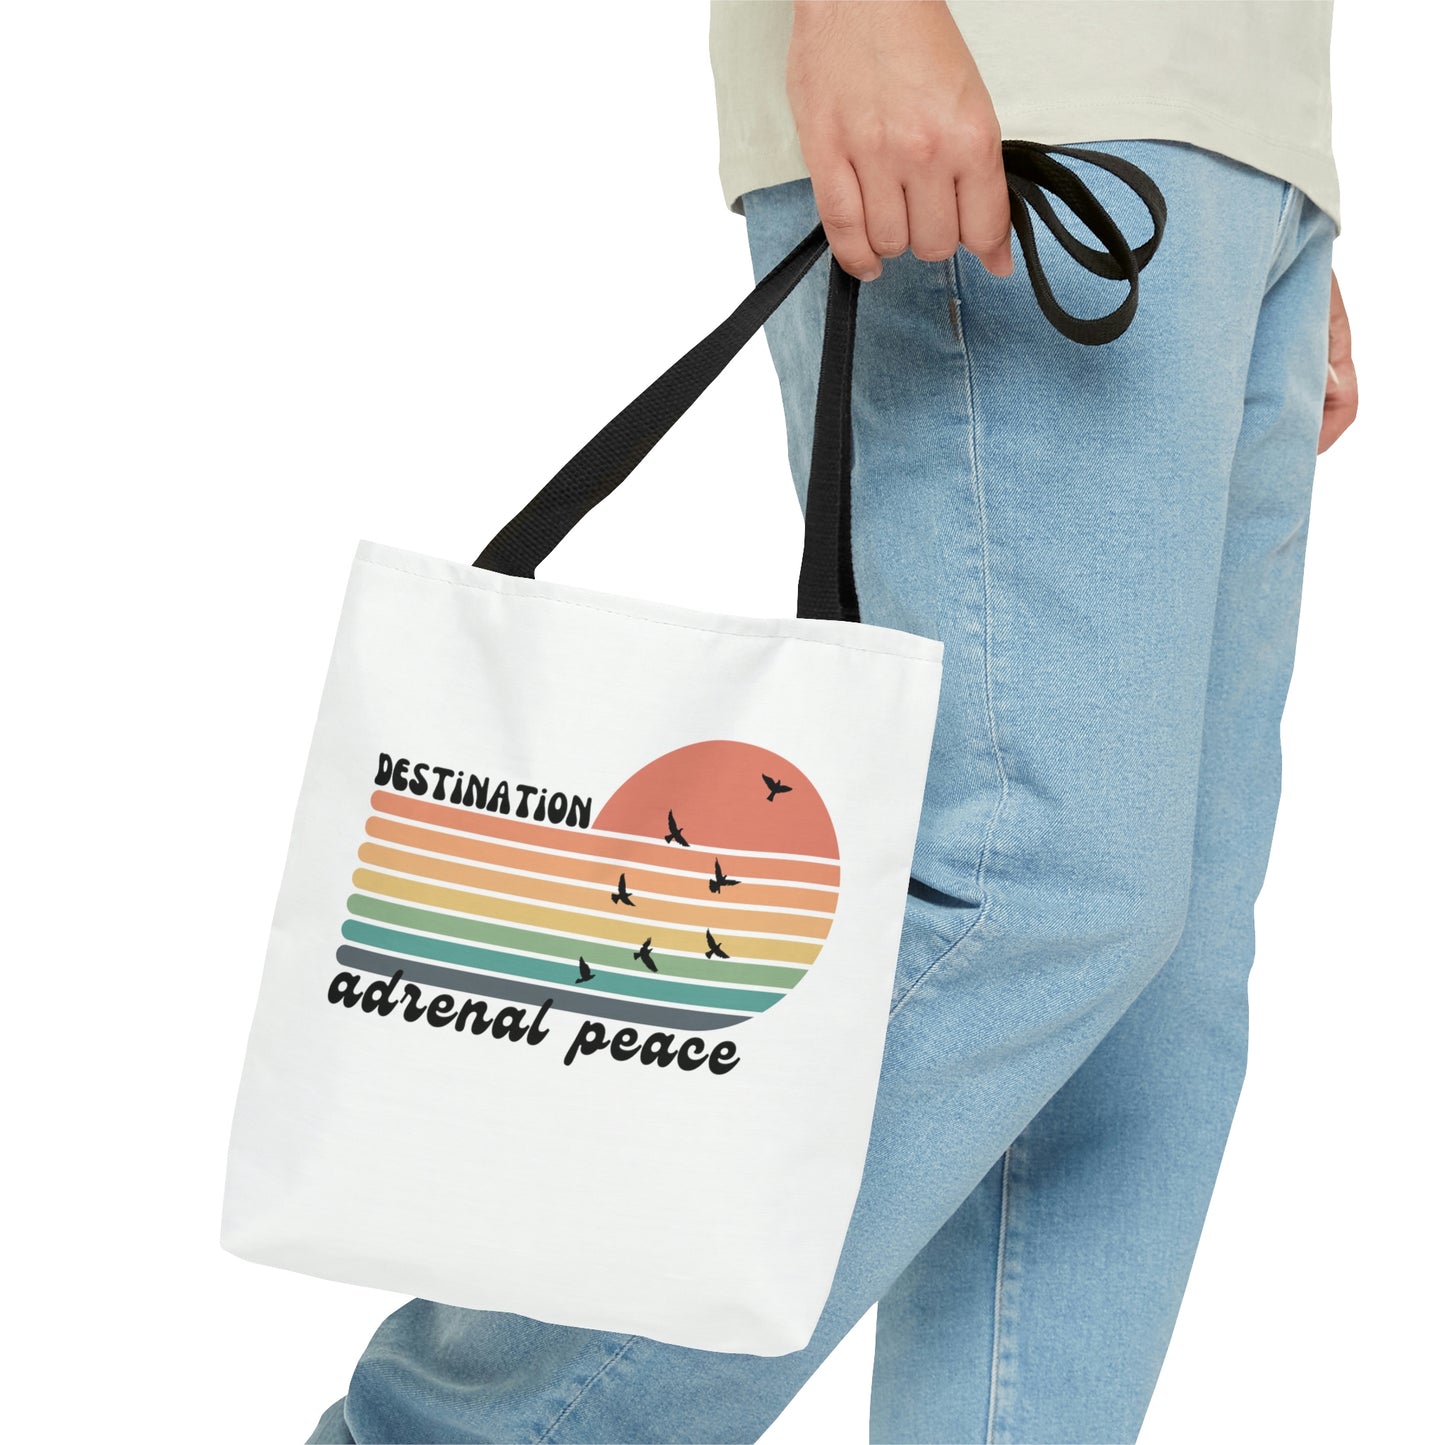 Destination: Adrenal Peace (retro rainbow) Tote Bag in 3 sizes